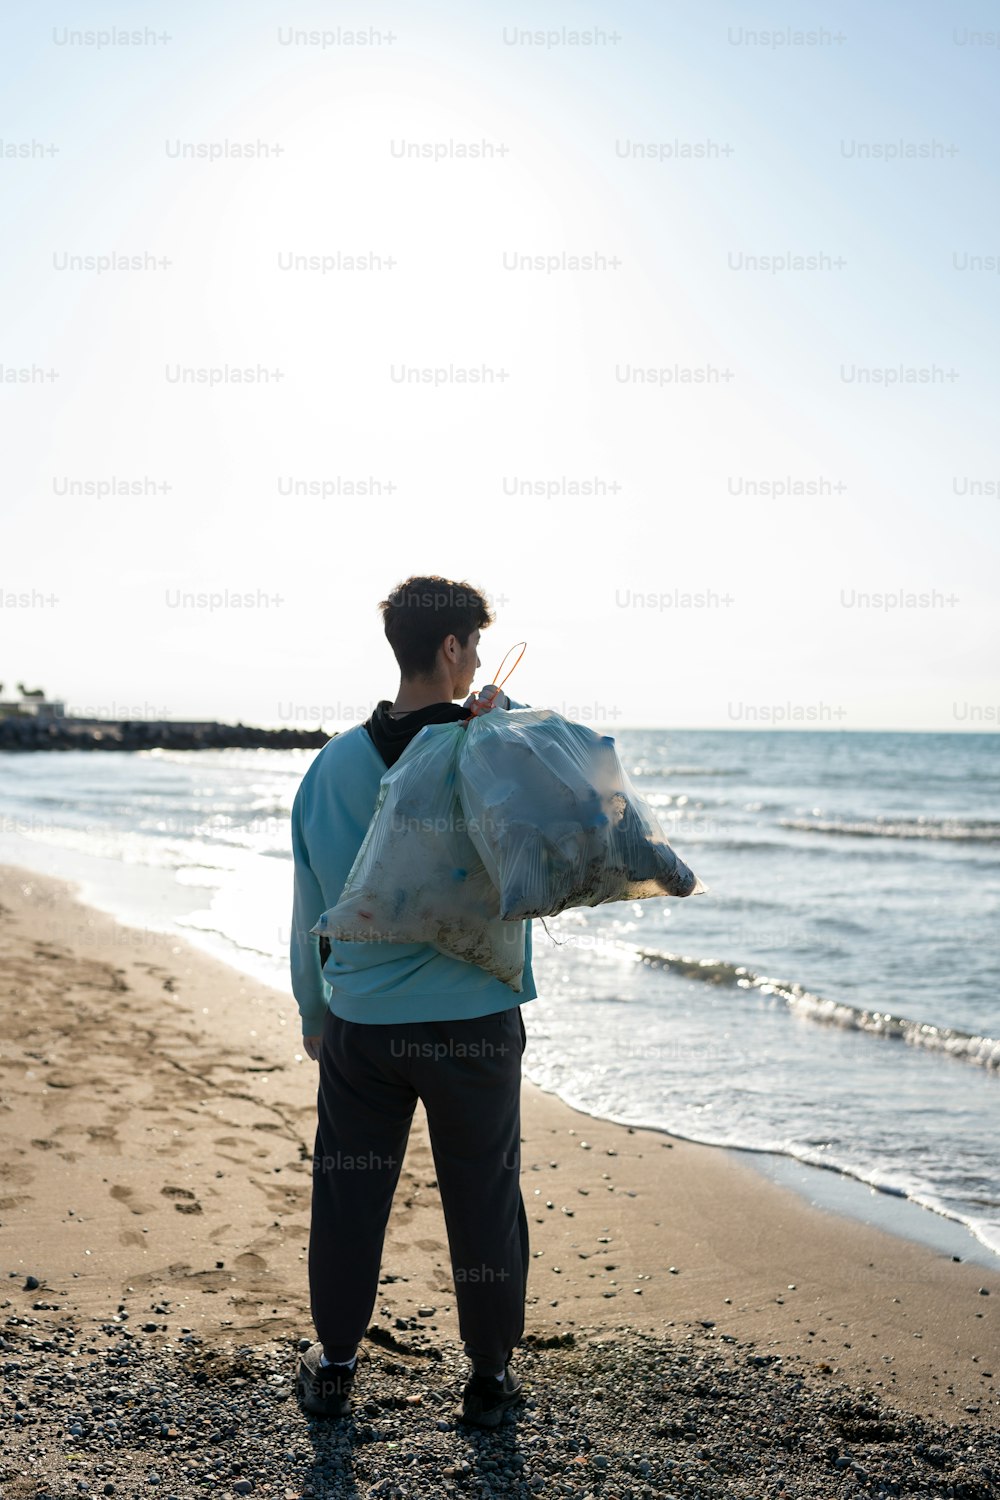 a man standing on a beach holding a bag